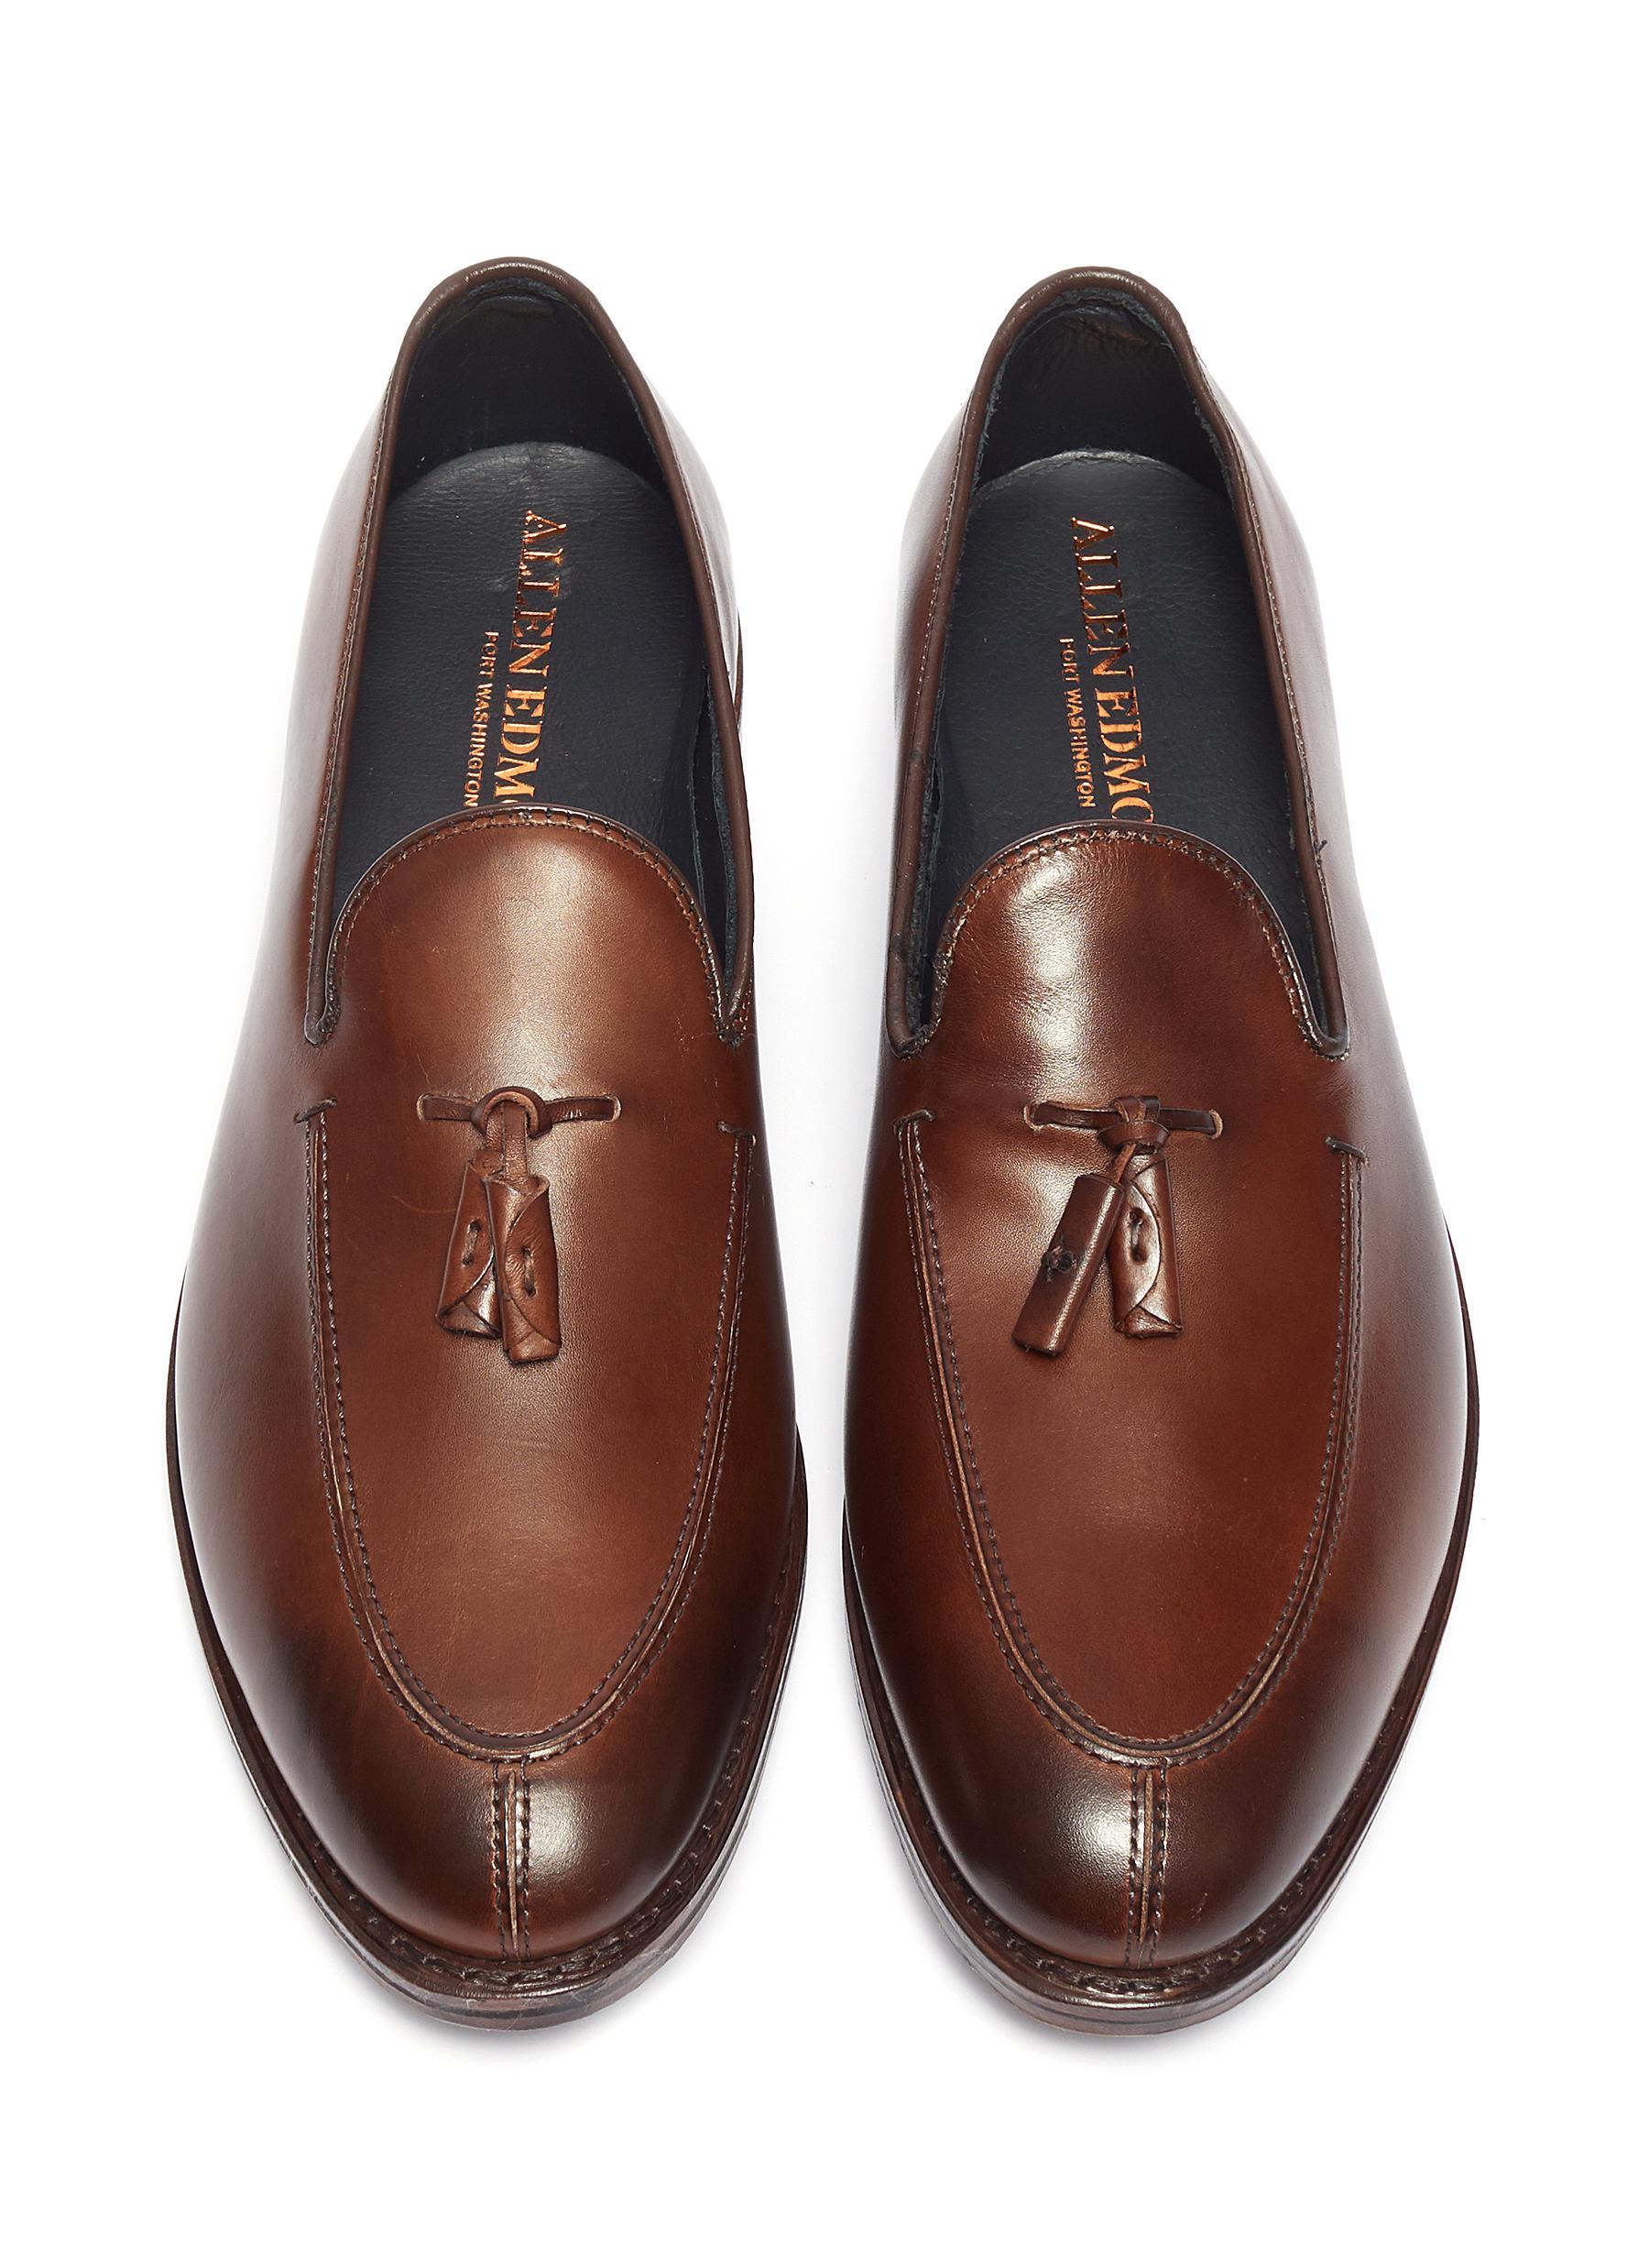 Allen Edmonds Spring Street Tassel Leather Loafers In Brown For Men Lyst